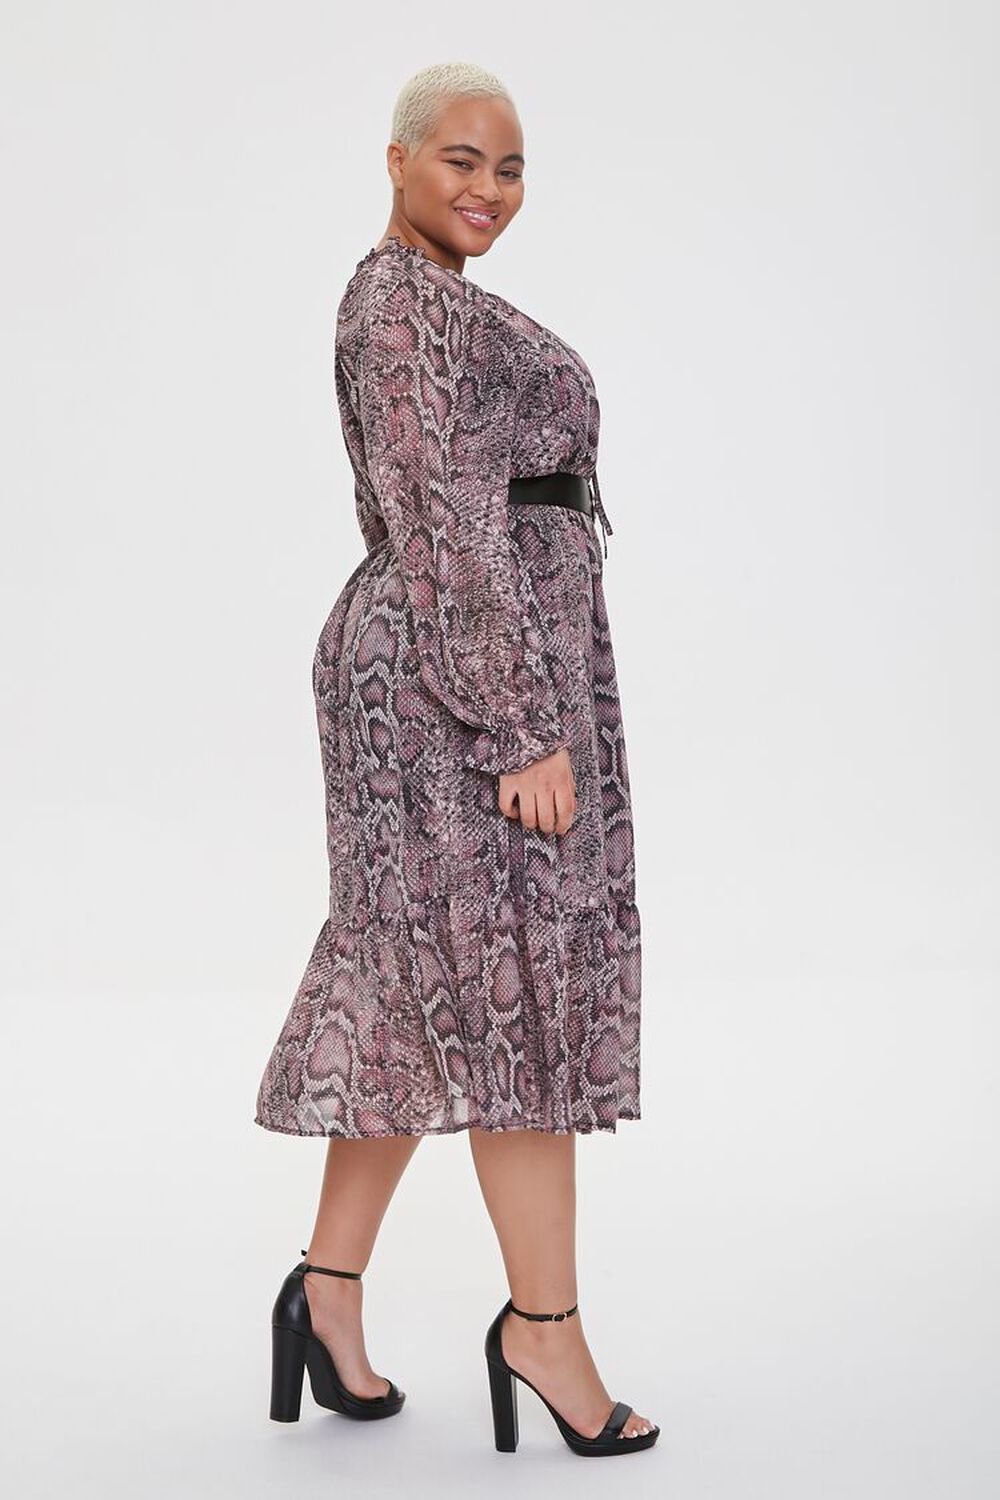 TAN/MULTI Plus Size Chiffon Snakeskin Print Dress, image 2